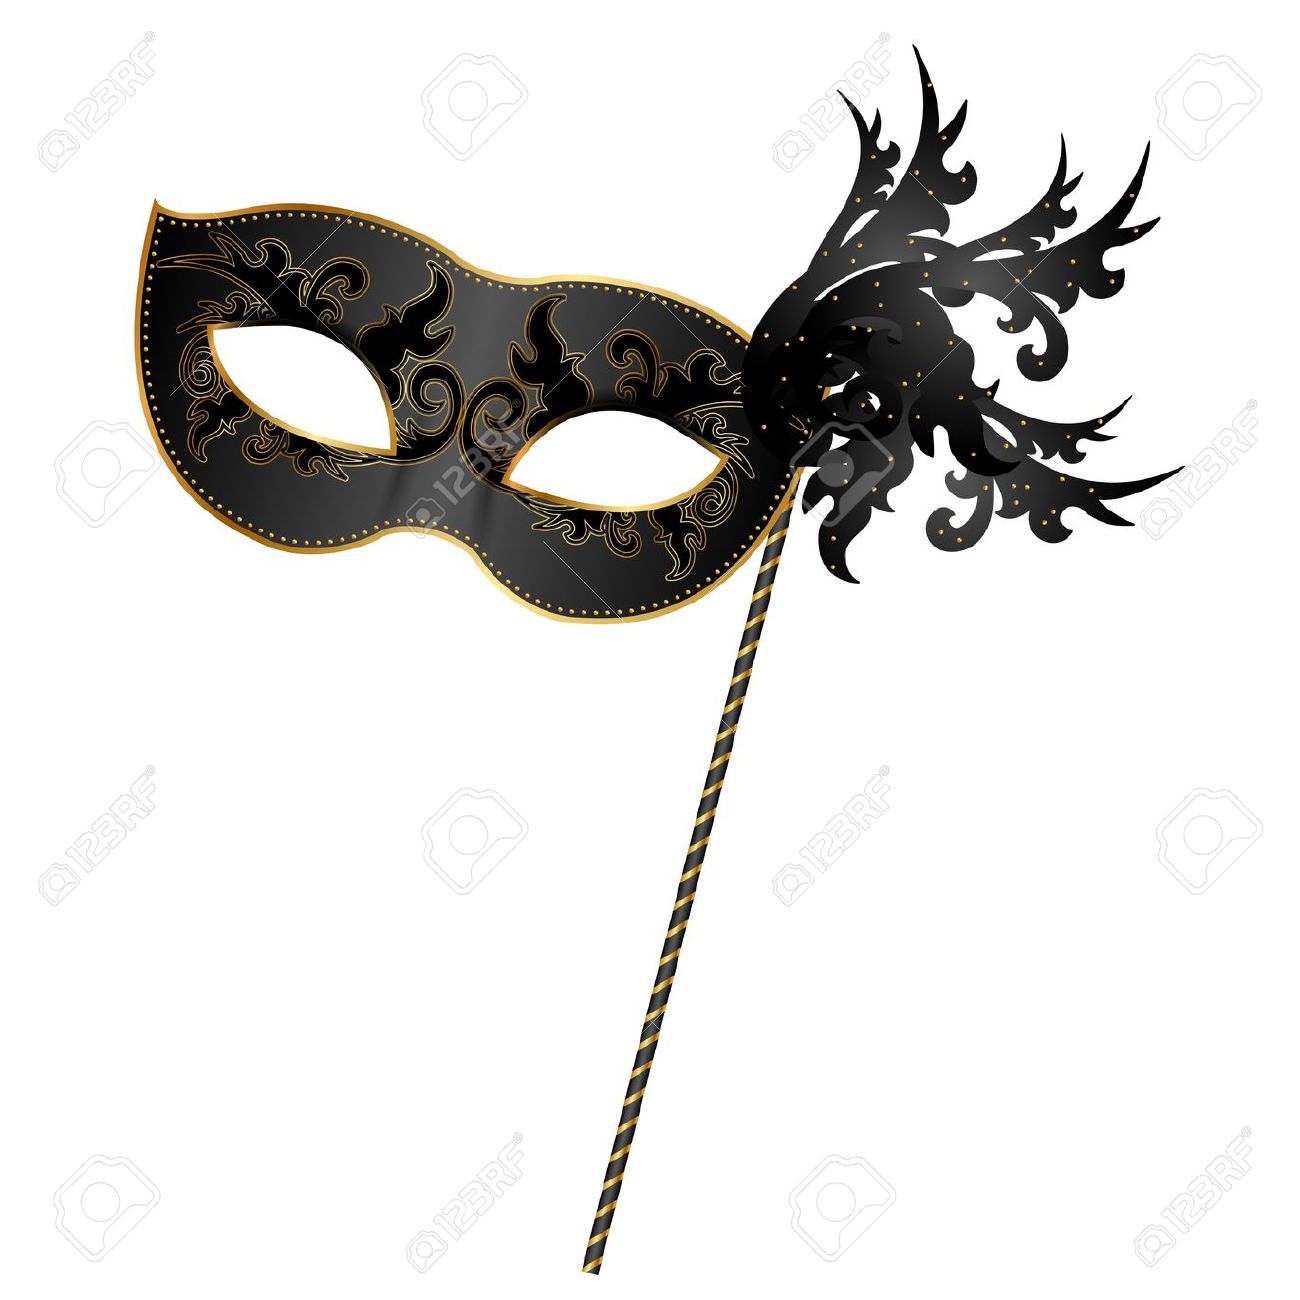 masquerade mask: illustration .